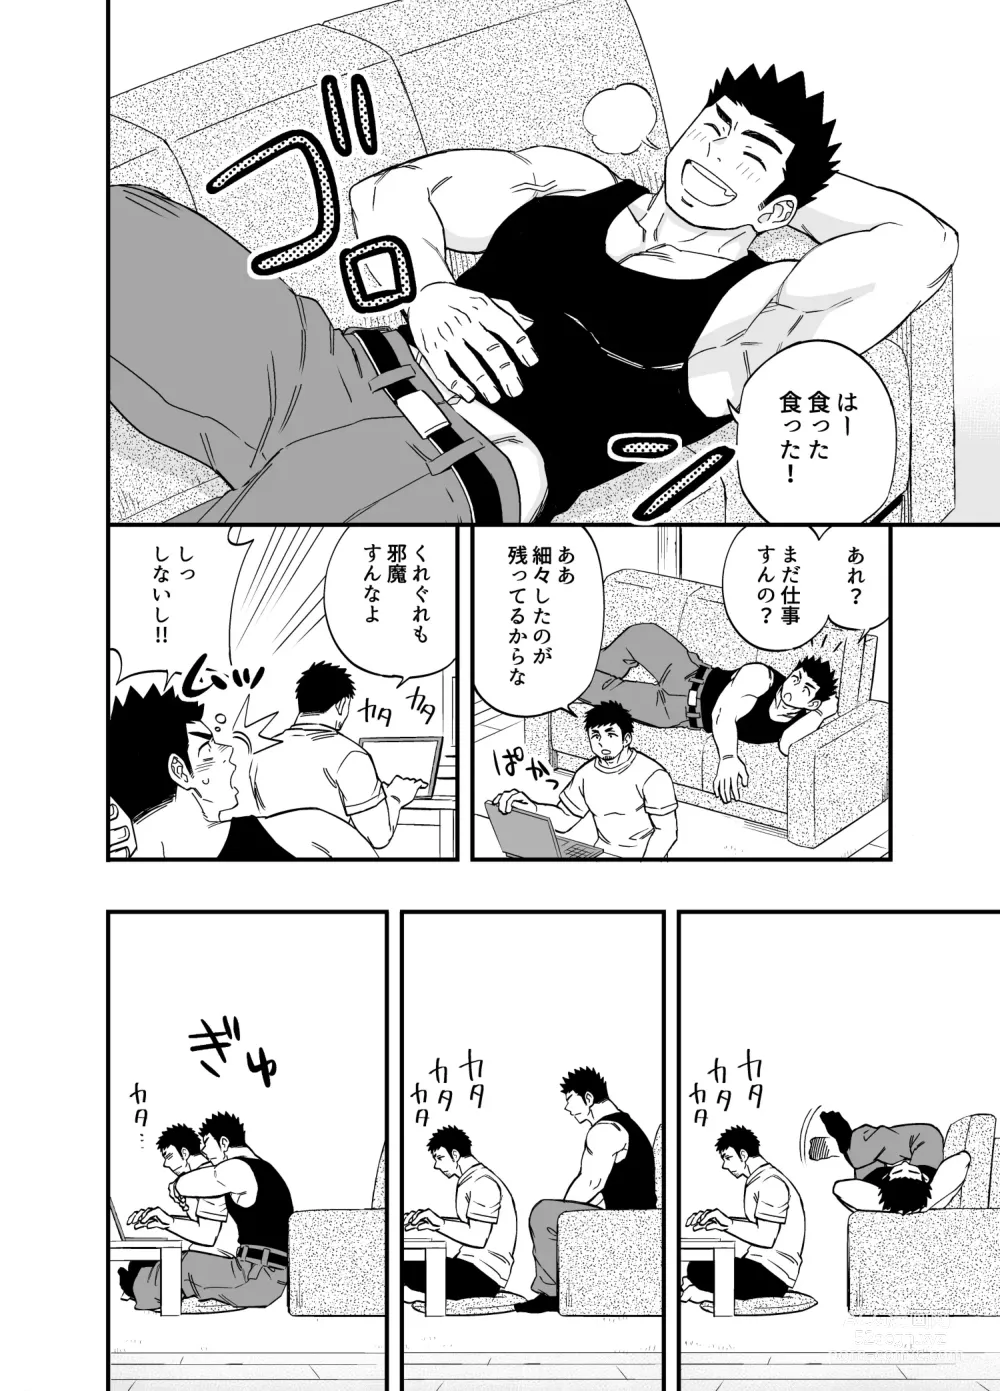 Page 11 of doujinshi Wonderful Life